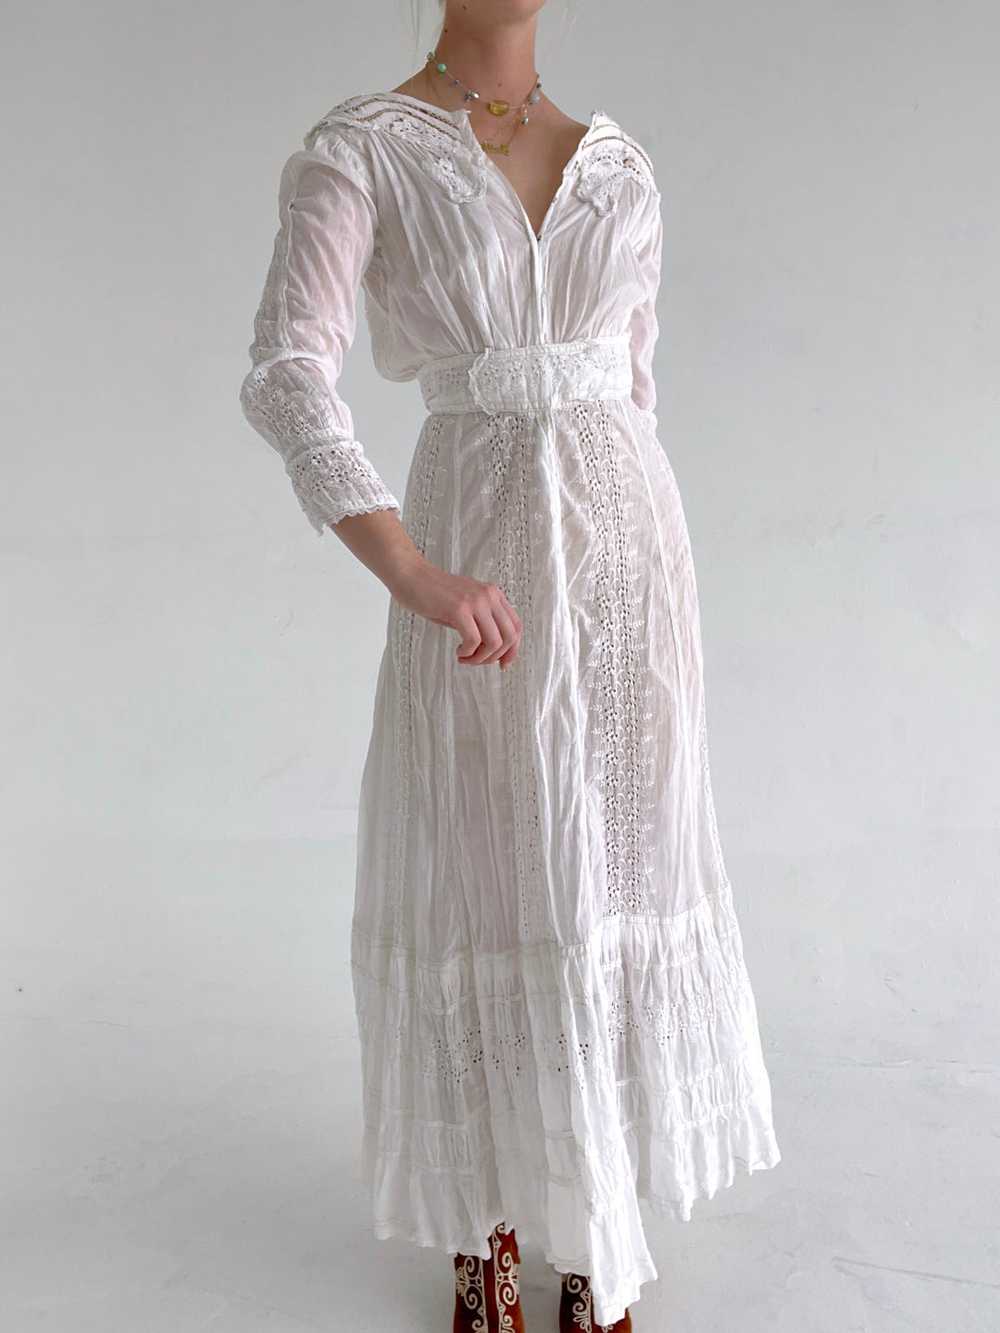 Victorian White Cotton Lawn Dress - image 2